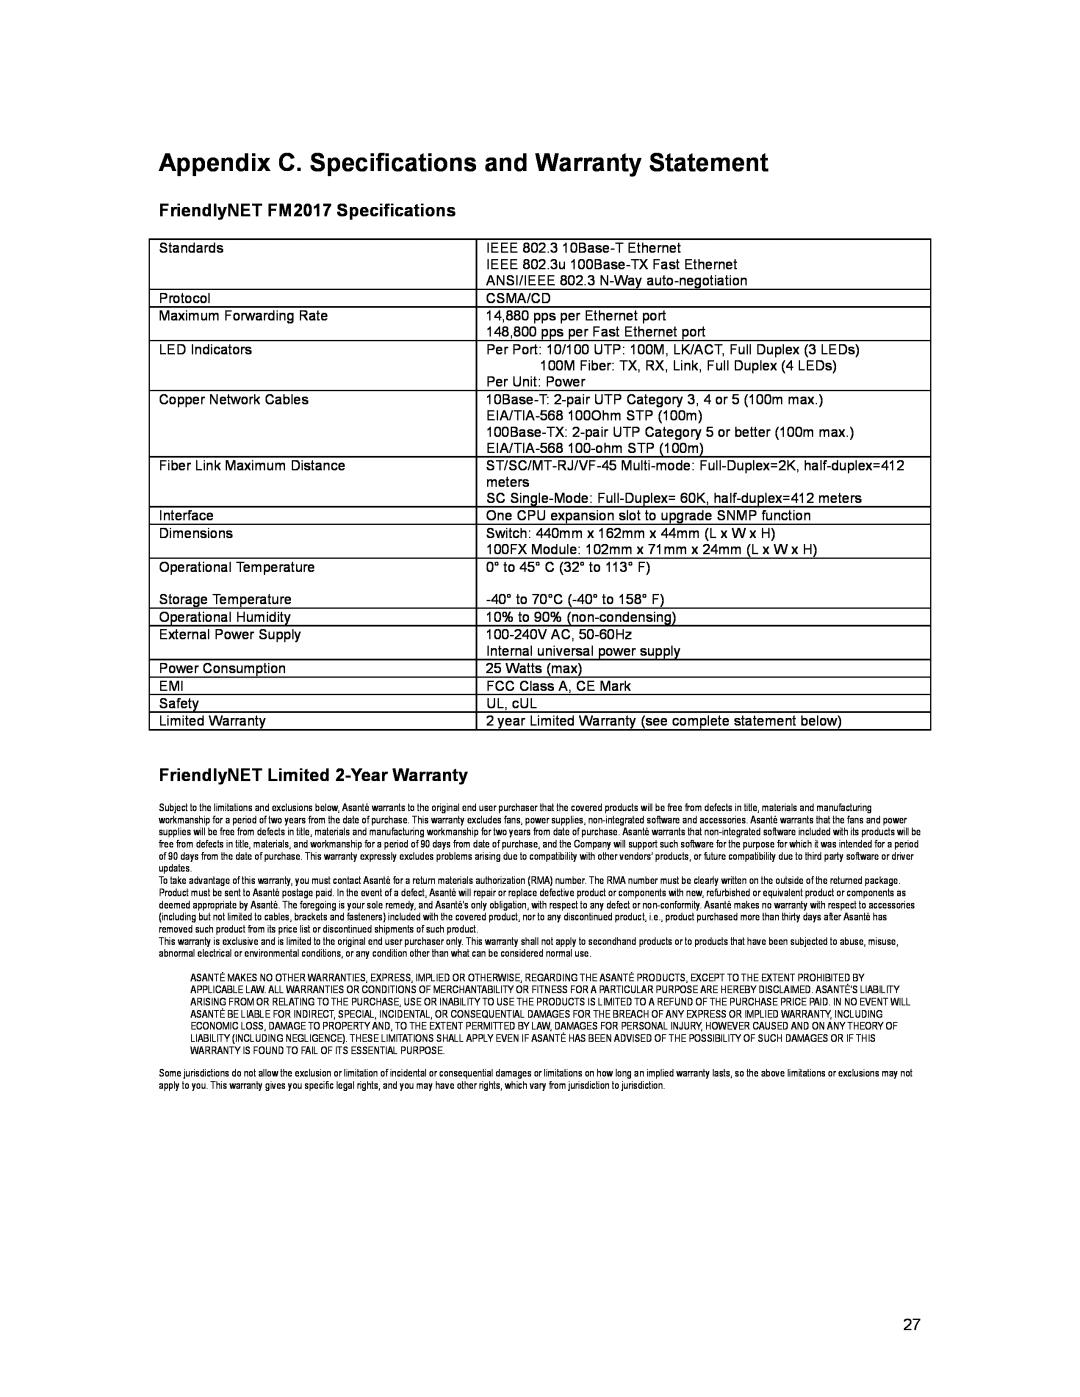 Asante Technologies user manual Appendix C. Specifications and Warranty Statement, FriendlyNET FM2017 Specifications 